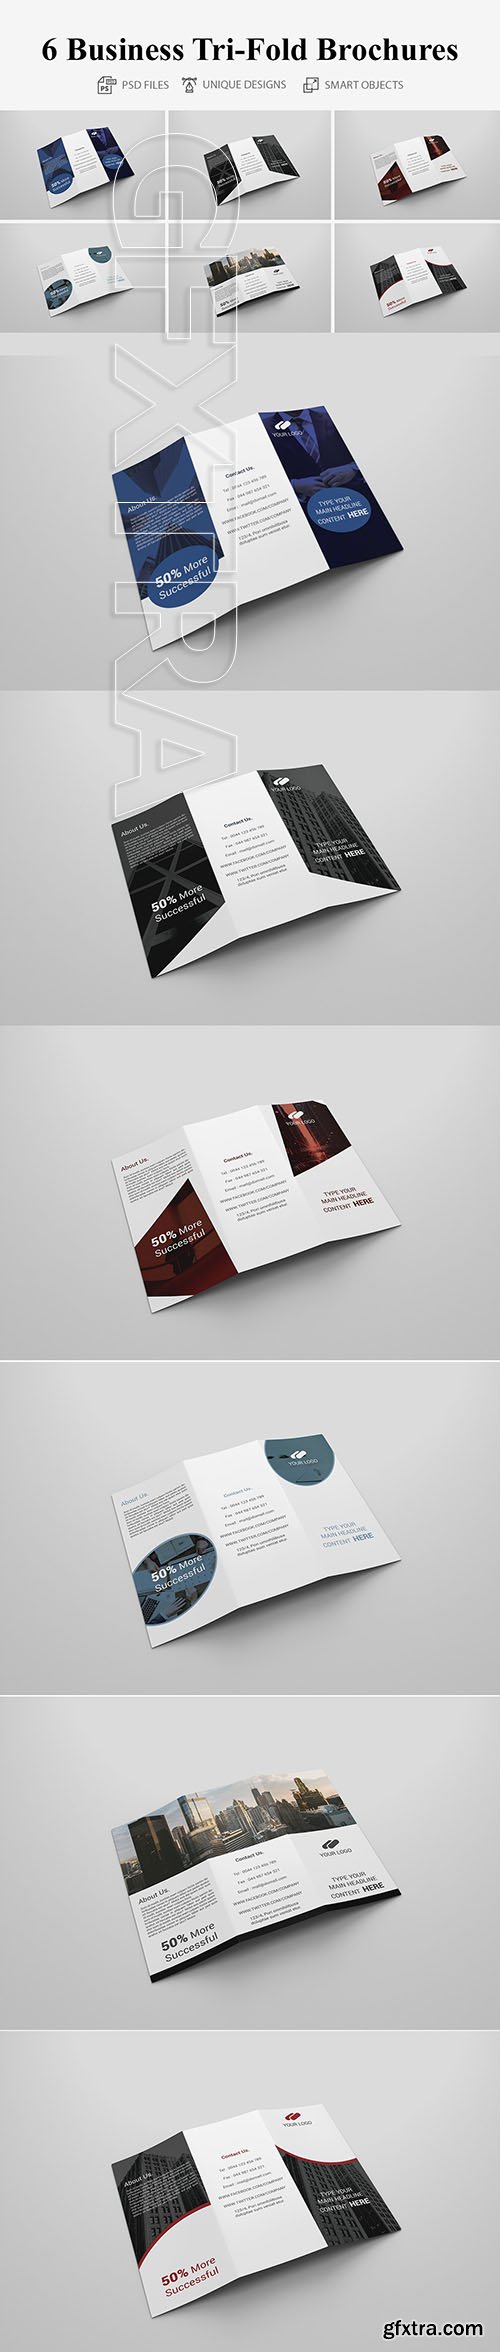 CreativeMarket - 6 Business Tri-fold Brochure 4117379